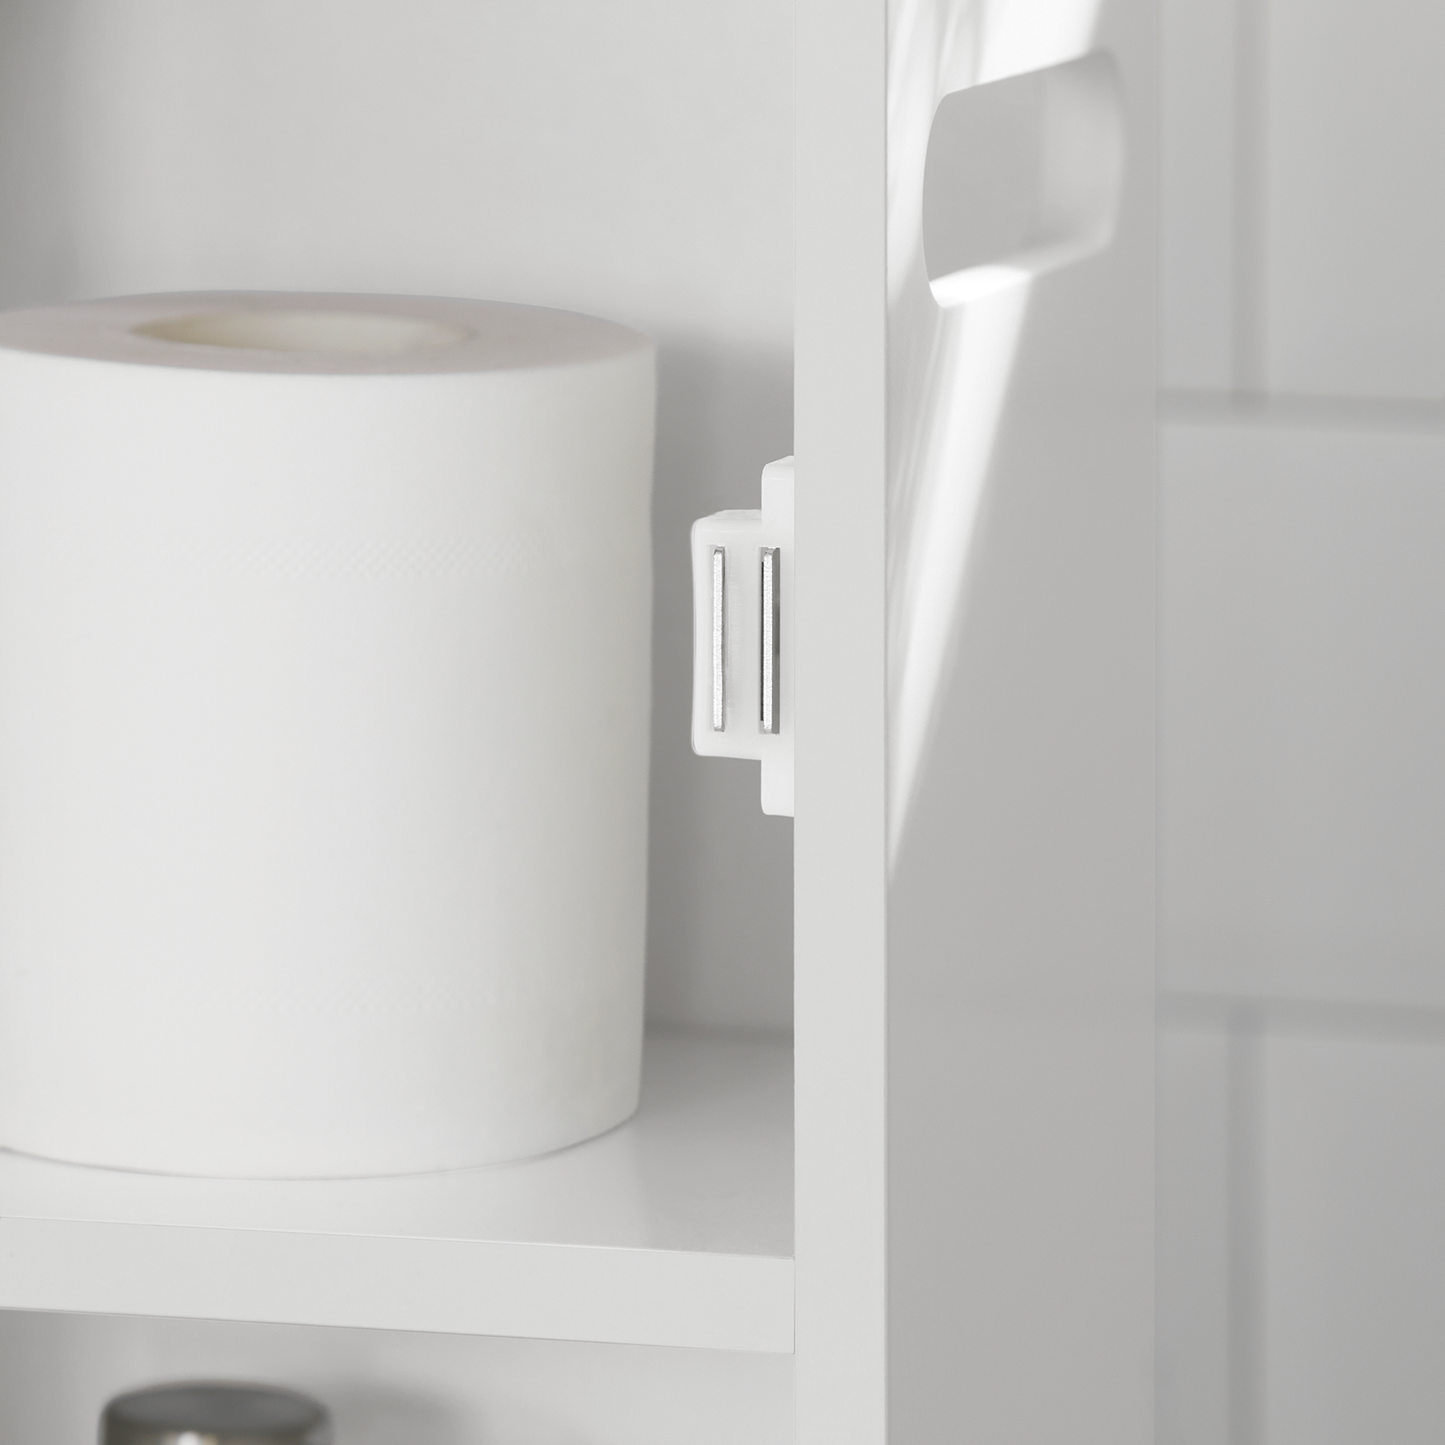 SoBuy Bathroom Toilet Paper Roll Holder Cabinet Storage Cabinet